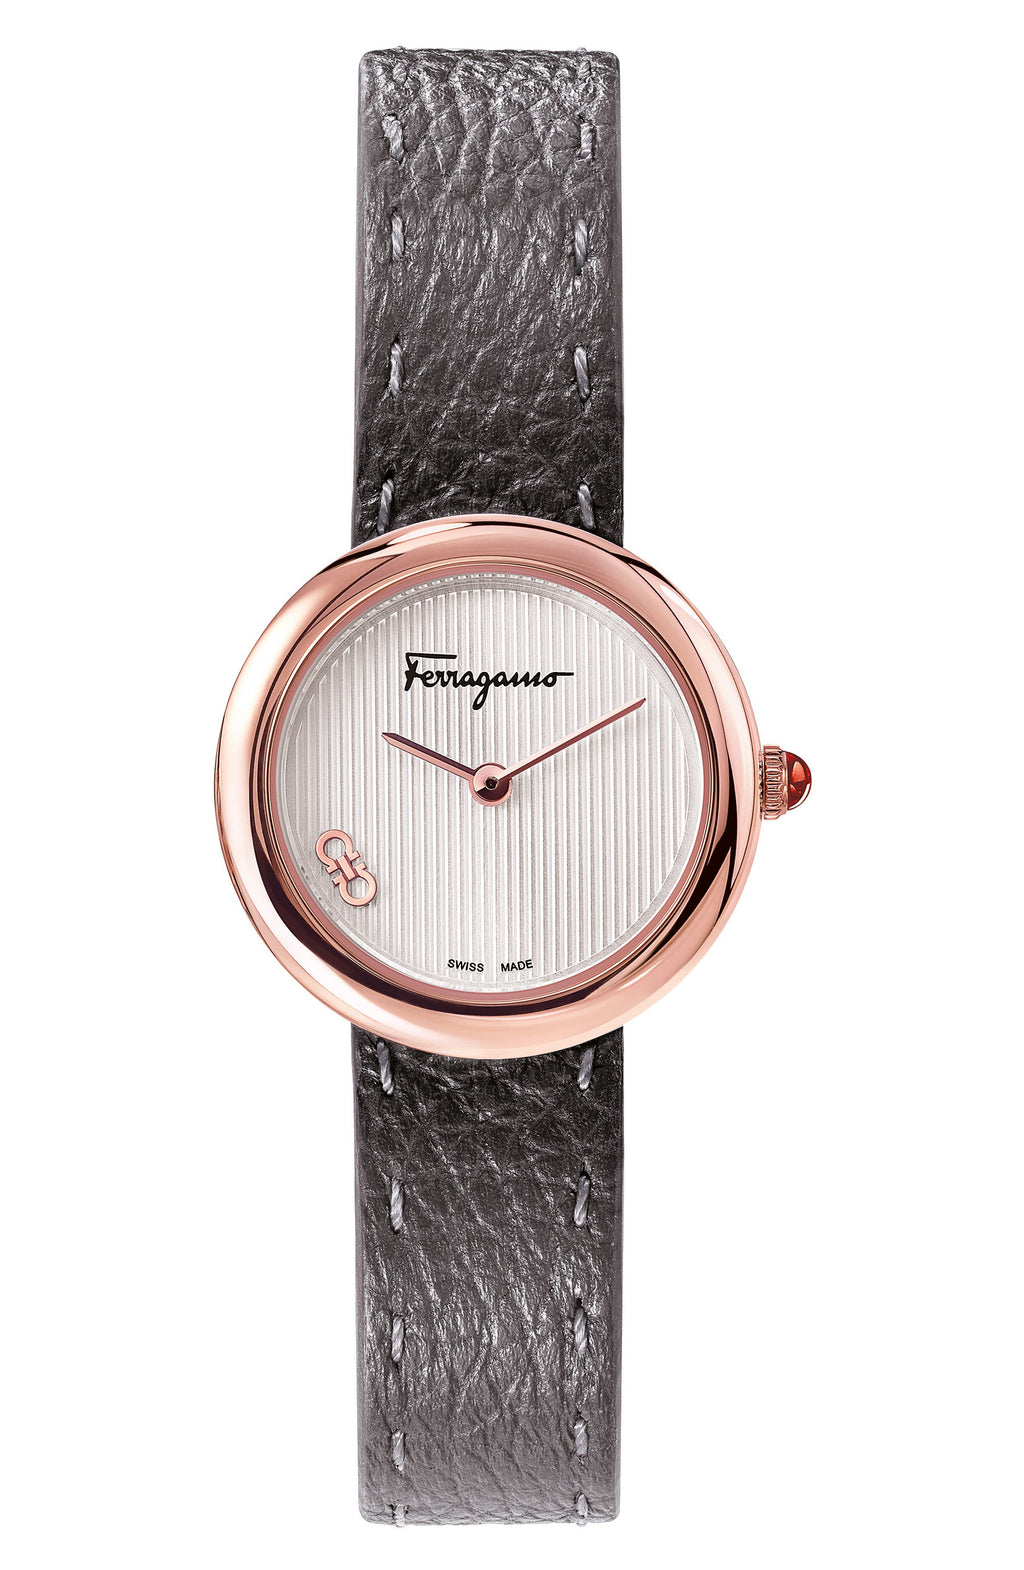 FERRAGAMO Leather Strap Watch, 28mm, Main, color, ROSE GOLD